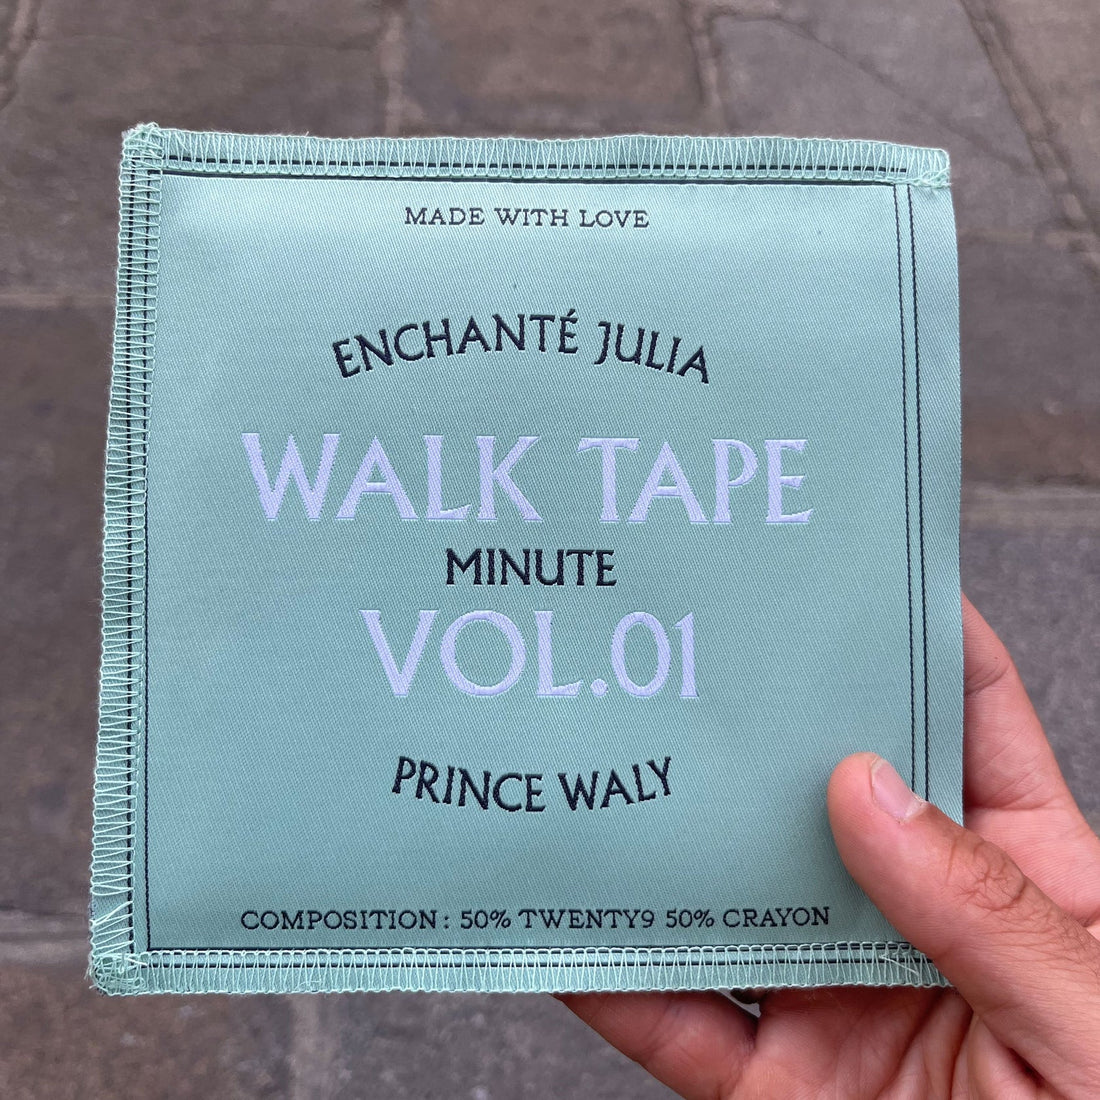 WALK TAPE VOL.1 "ENCHANTÉE" JULIA & PRINCE WALY EDITION